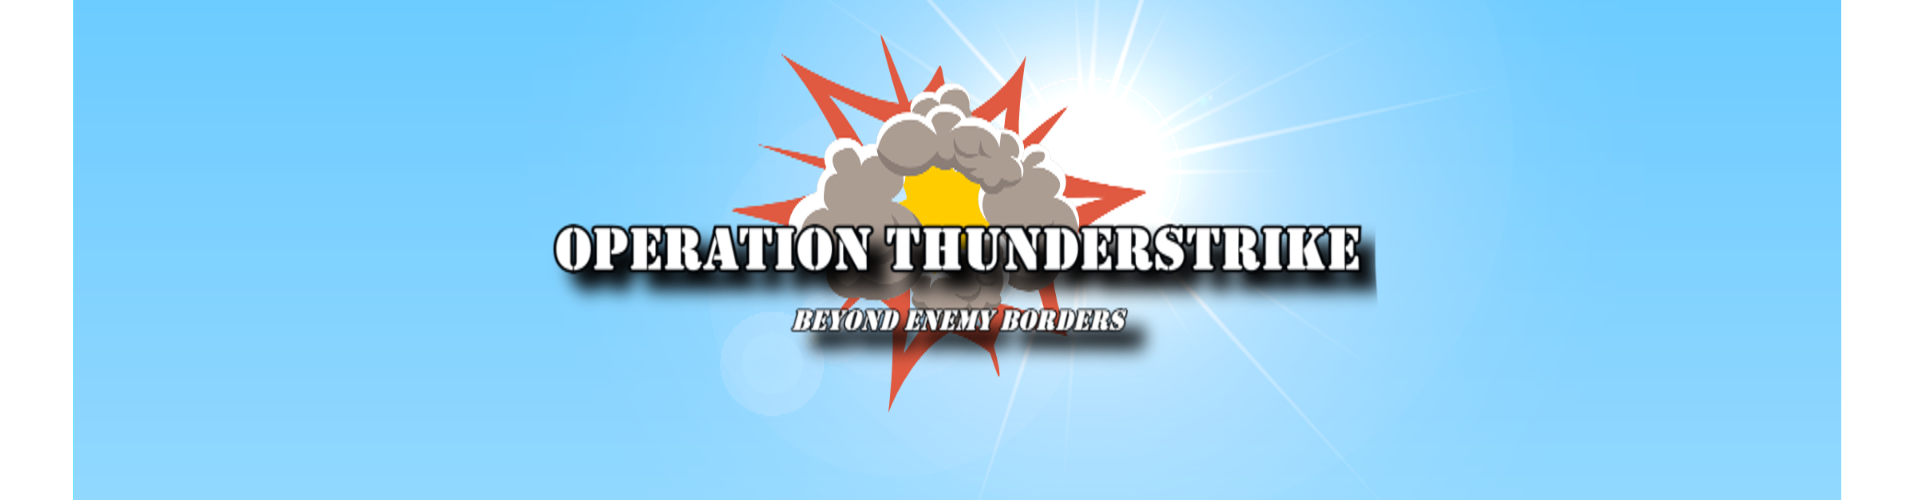 Operation Thunderstrike